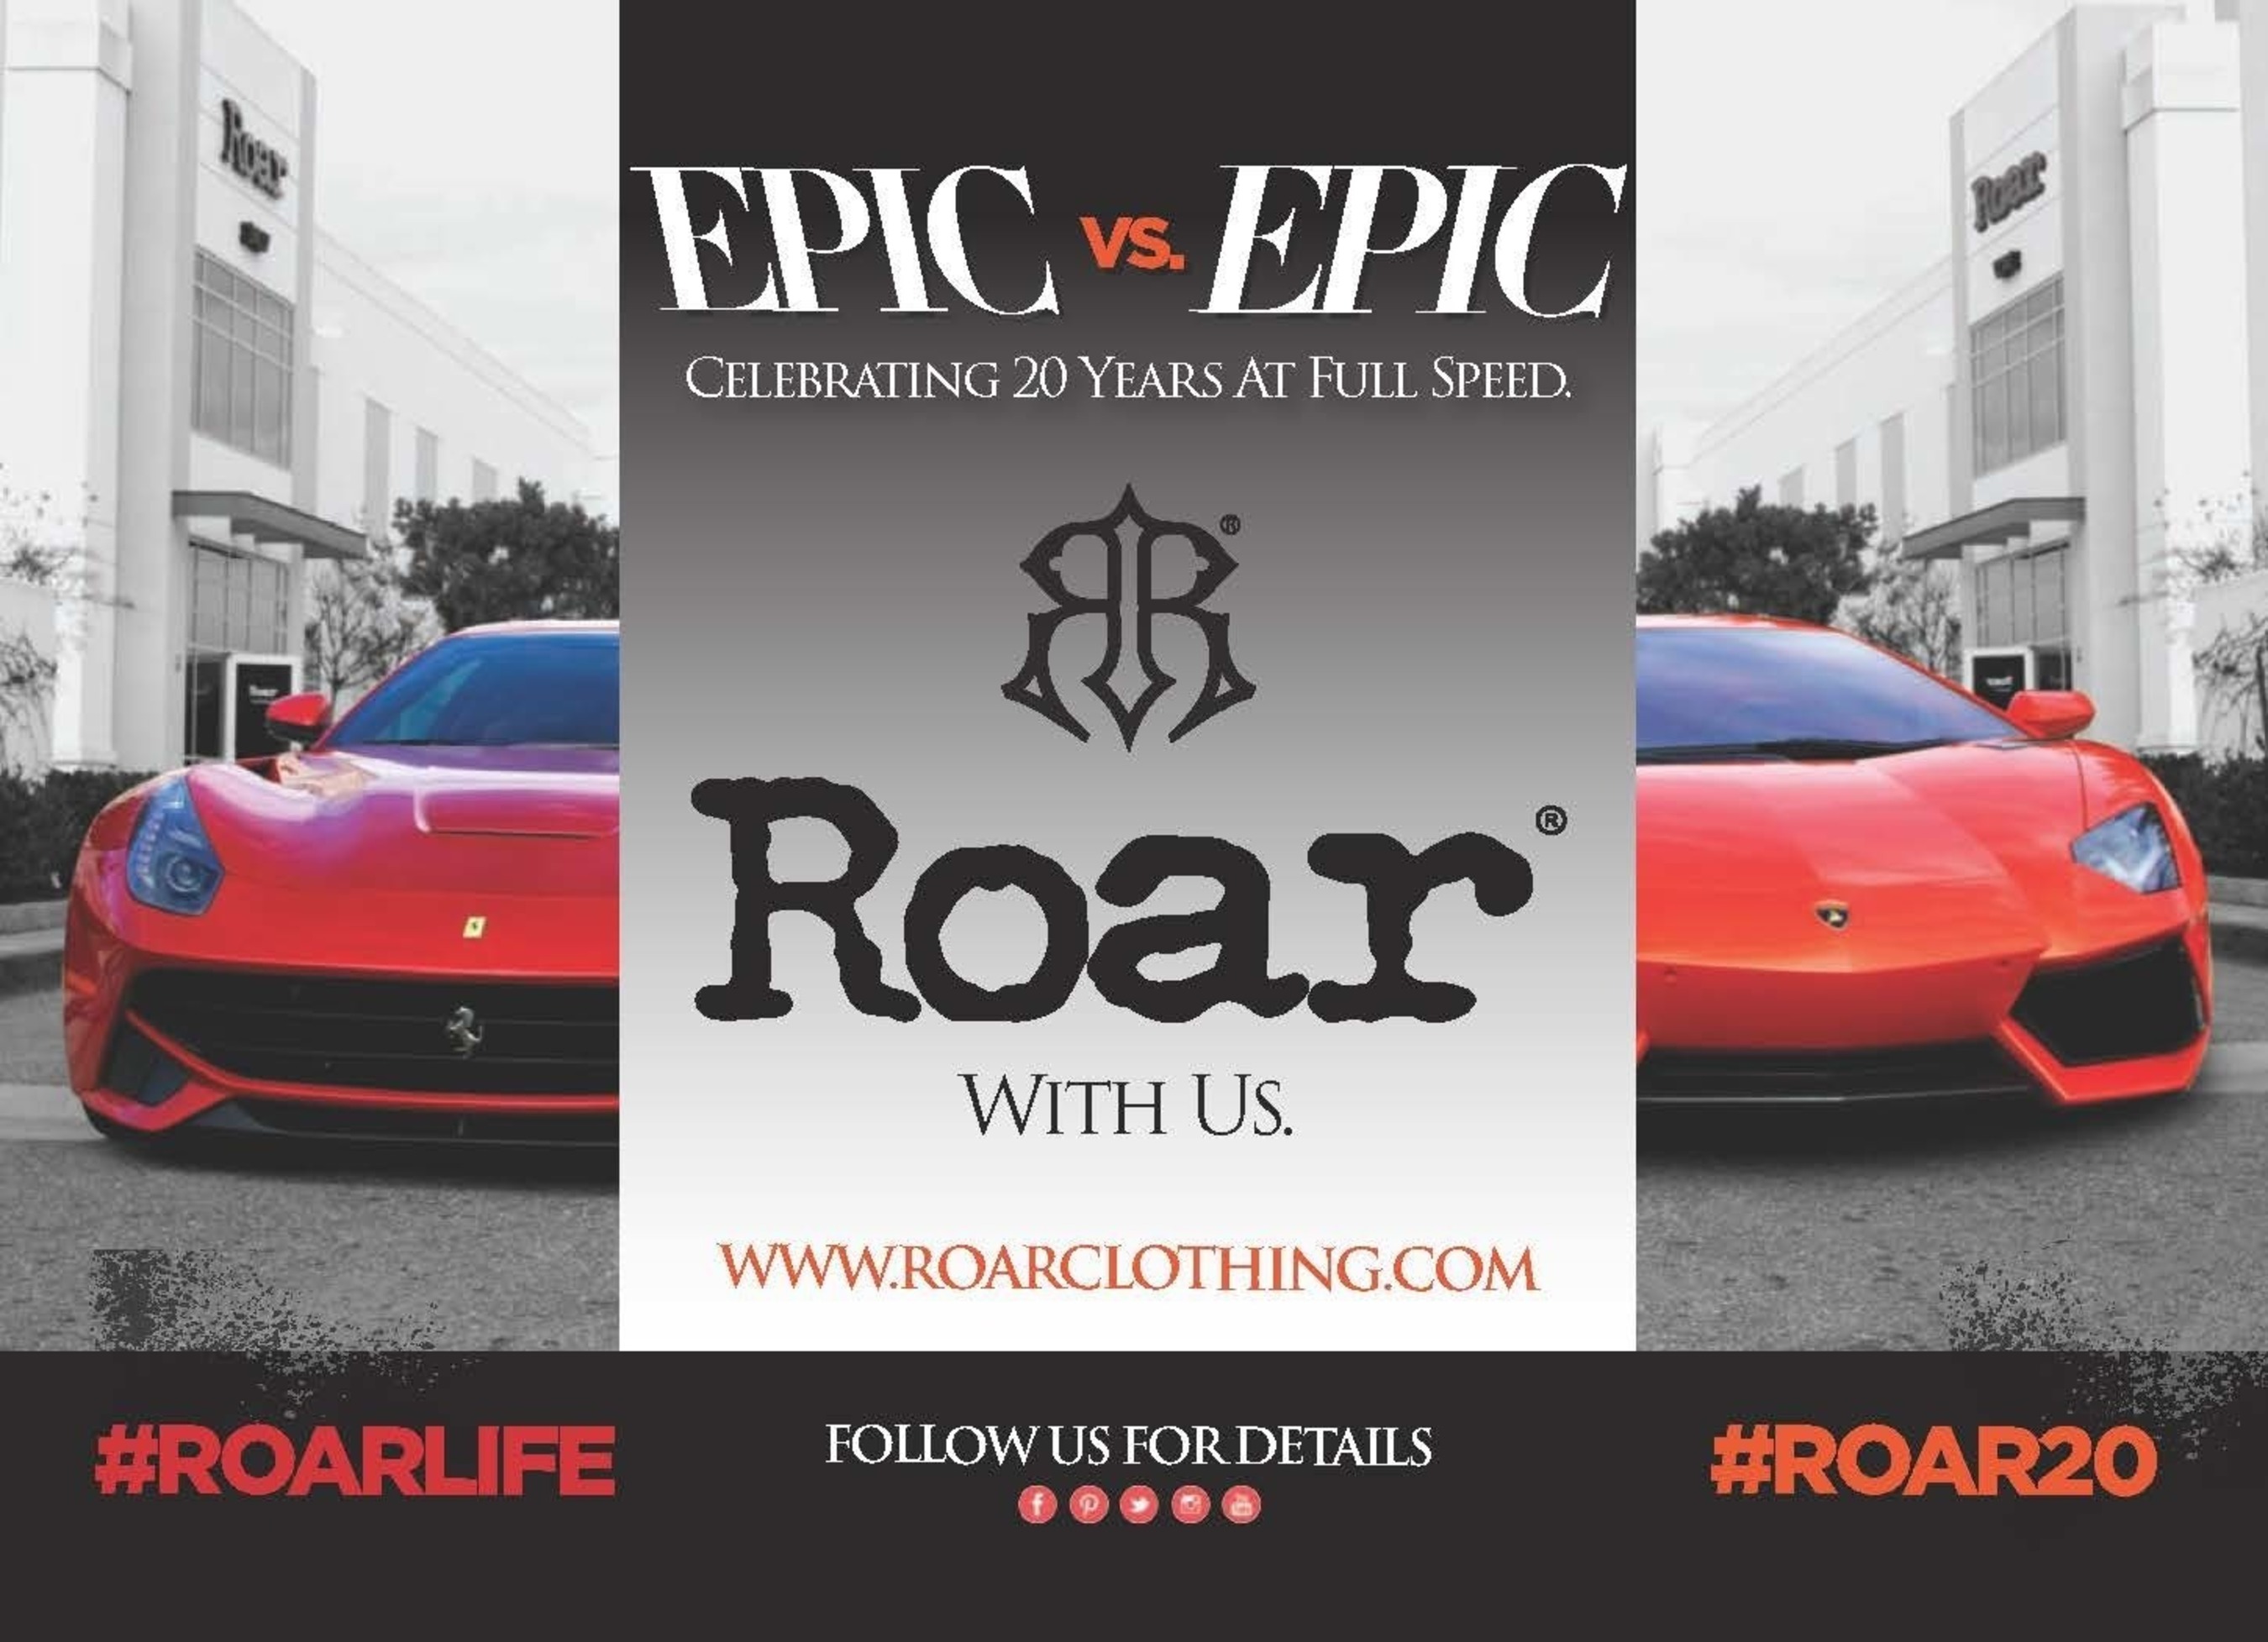 Roar Clothing Presents Epic vs. Epic: Lamborghini Aventador versus Ferrari F12 Berlinetta, in celebration of its 20th Anniversary. (PRNewsFoto/Roar Clothing)